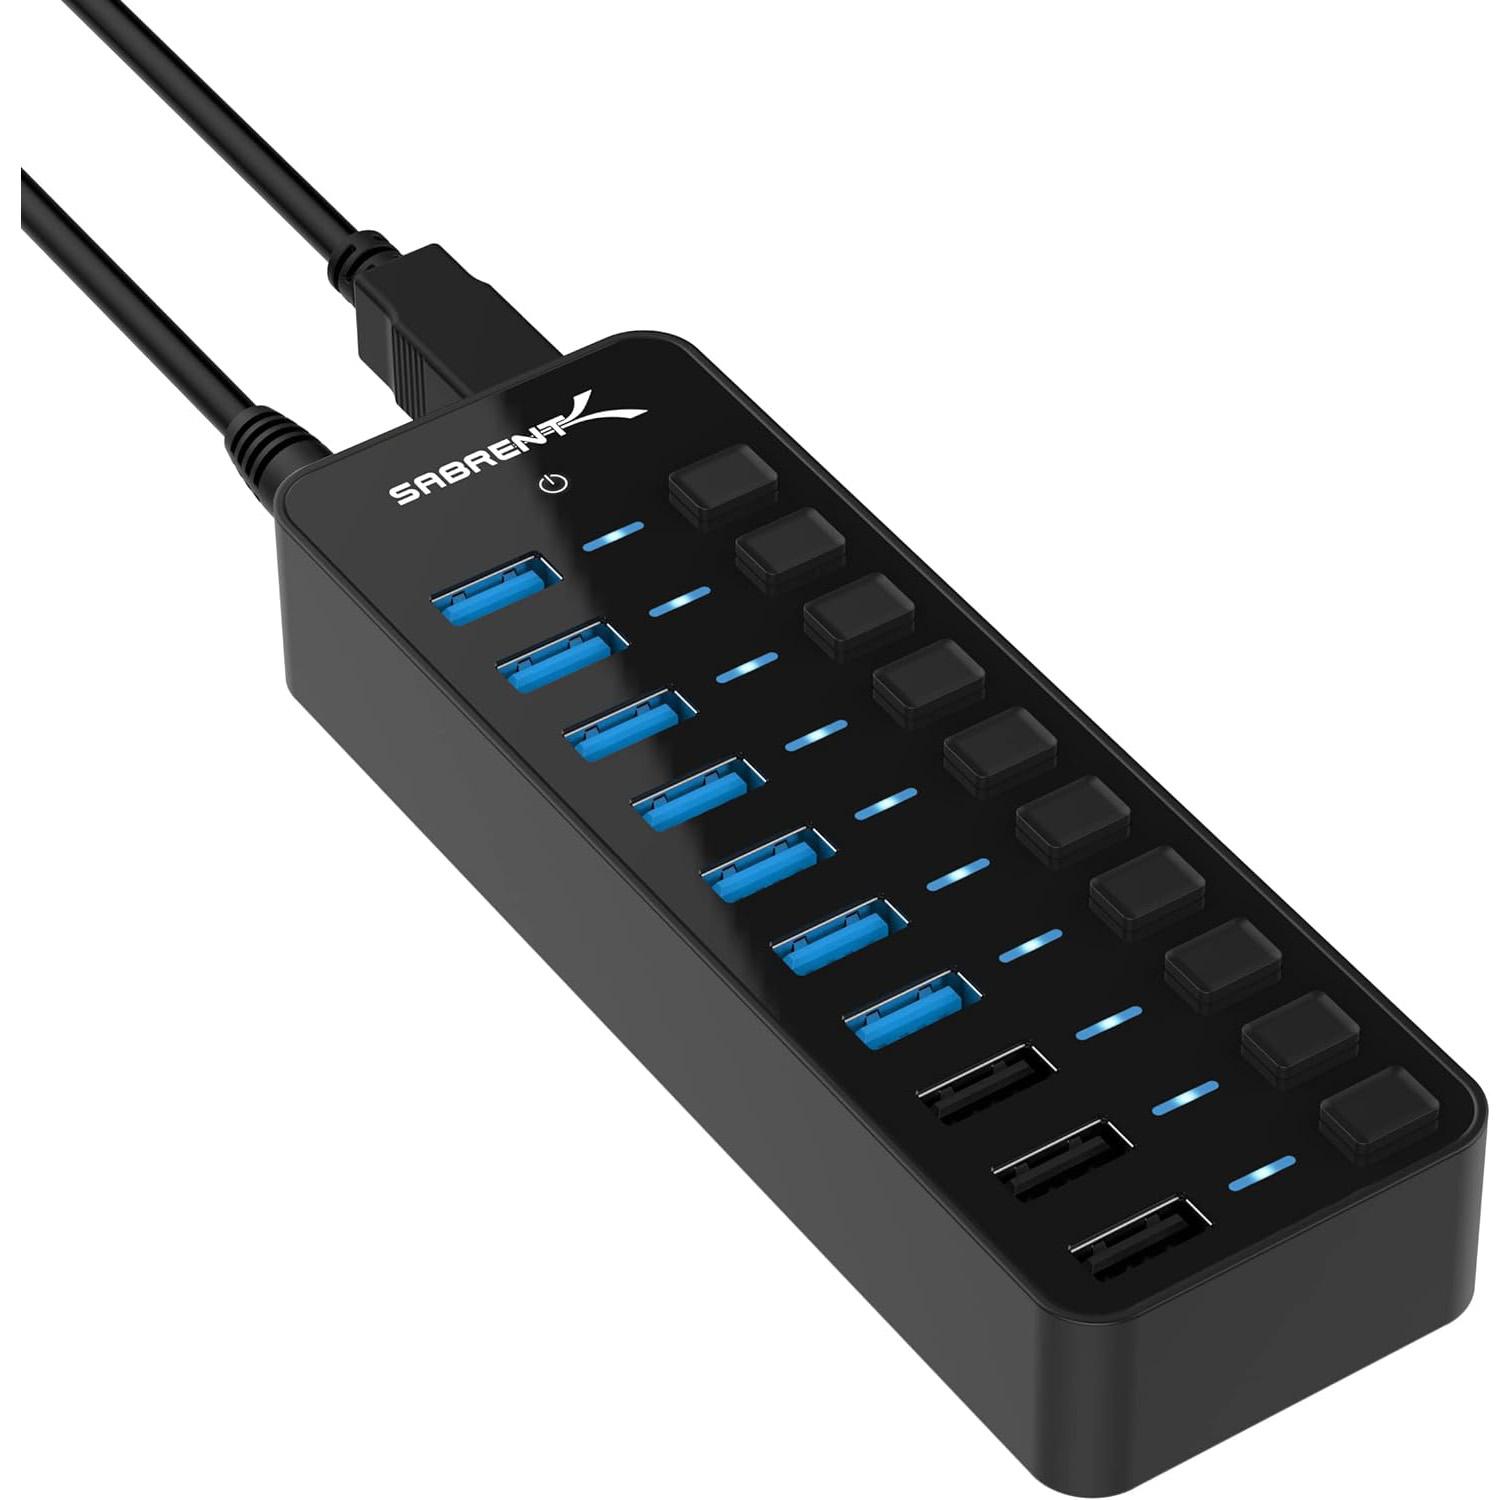 Sabrent 60W 10 Port USB 3.0 Hub for $36.95 Shipped